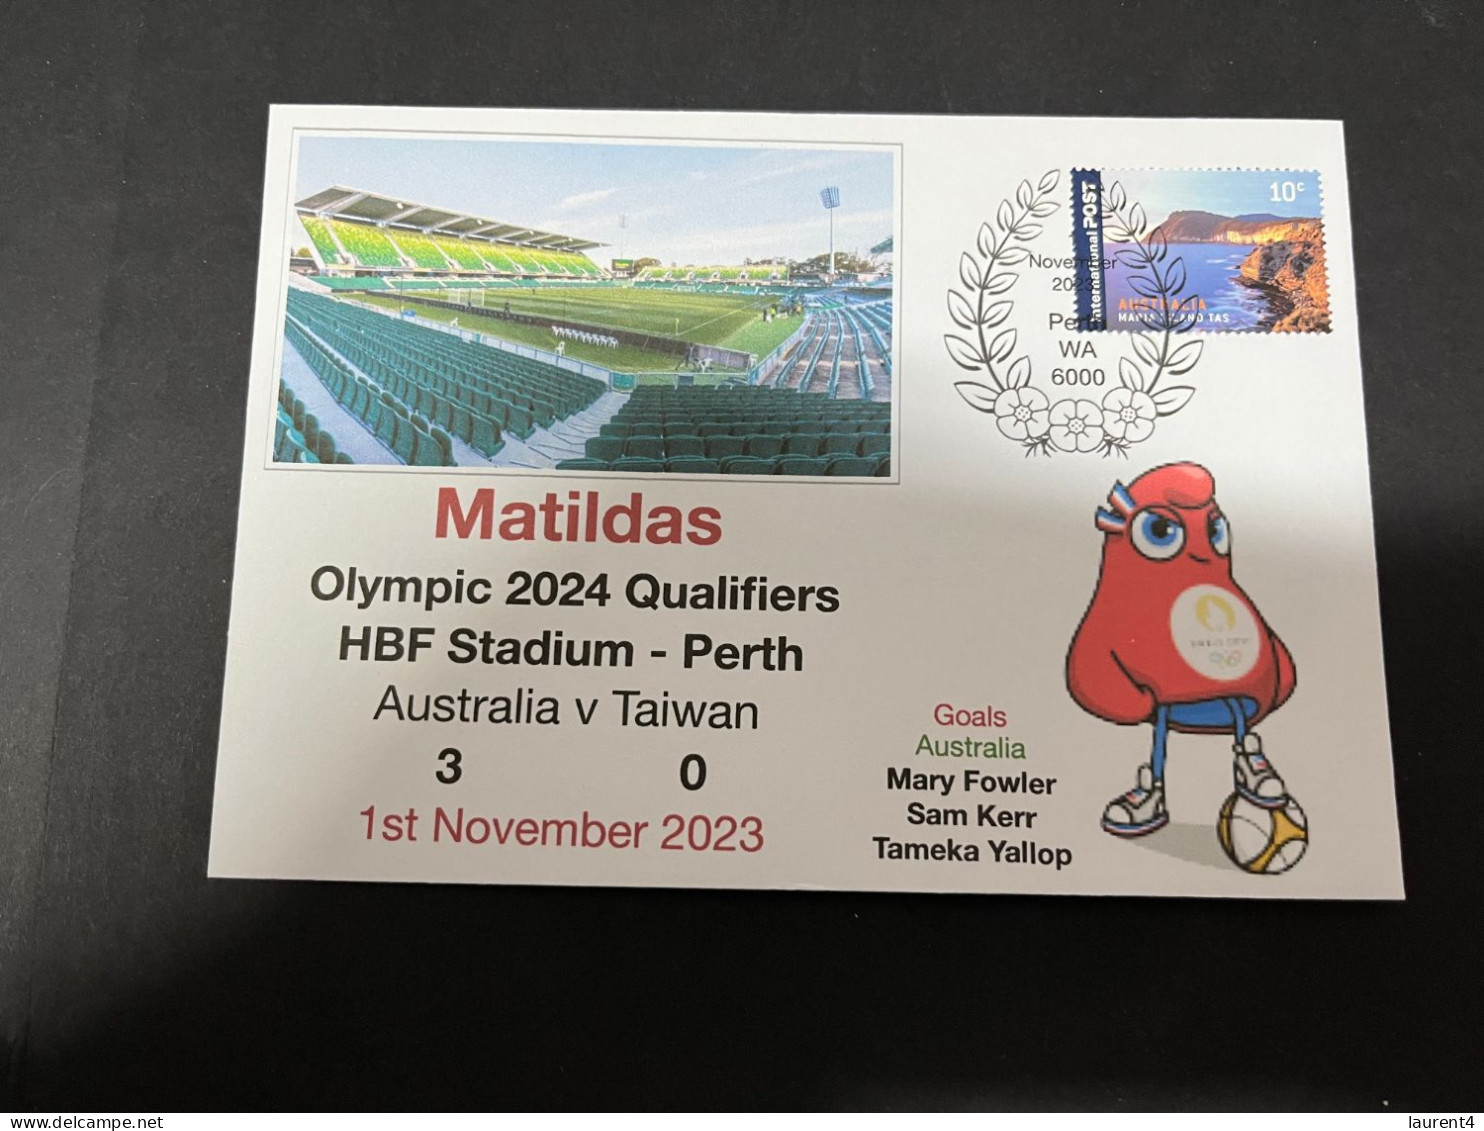 3-11-2023 (1 V 13) Australia (3) V Taiwan (0) - Matildas Olympic 2024 Qualifiers (match 3) 1-11-2023 In Perth - Summer 2024: Paris